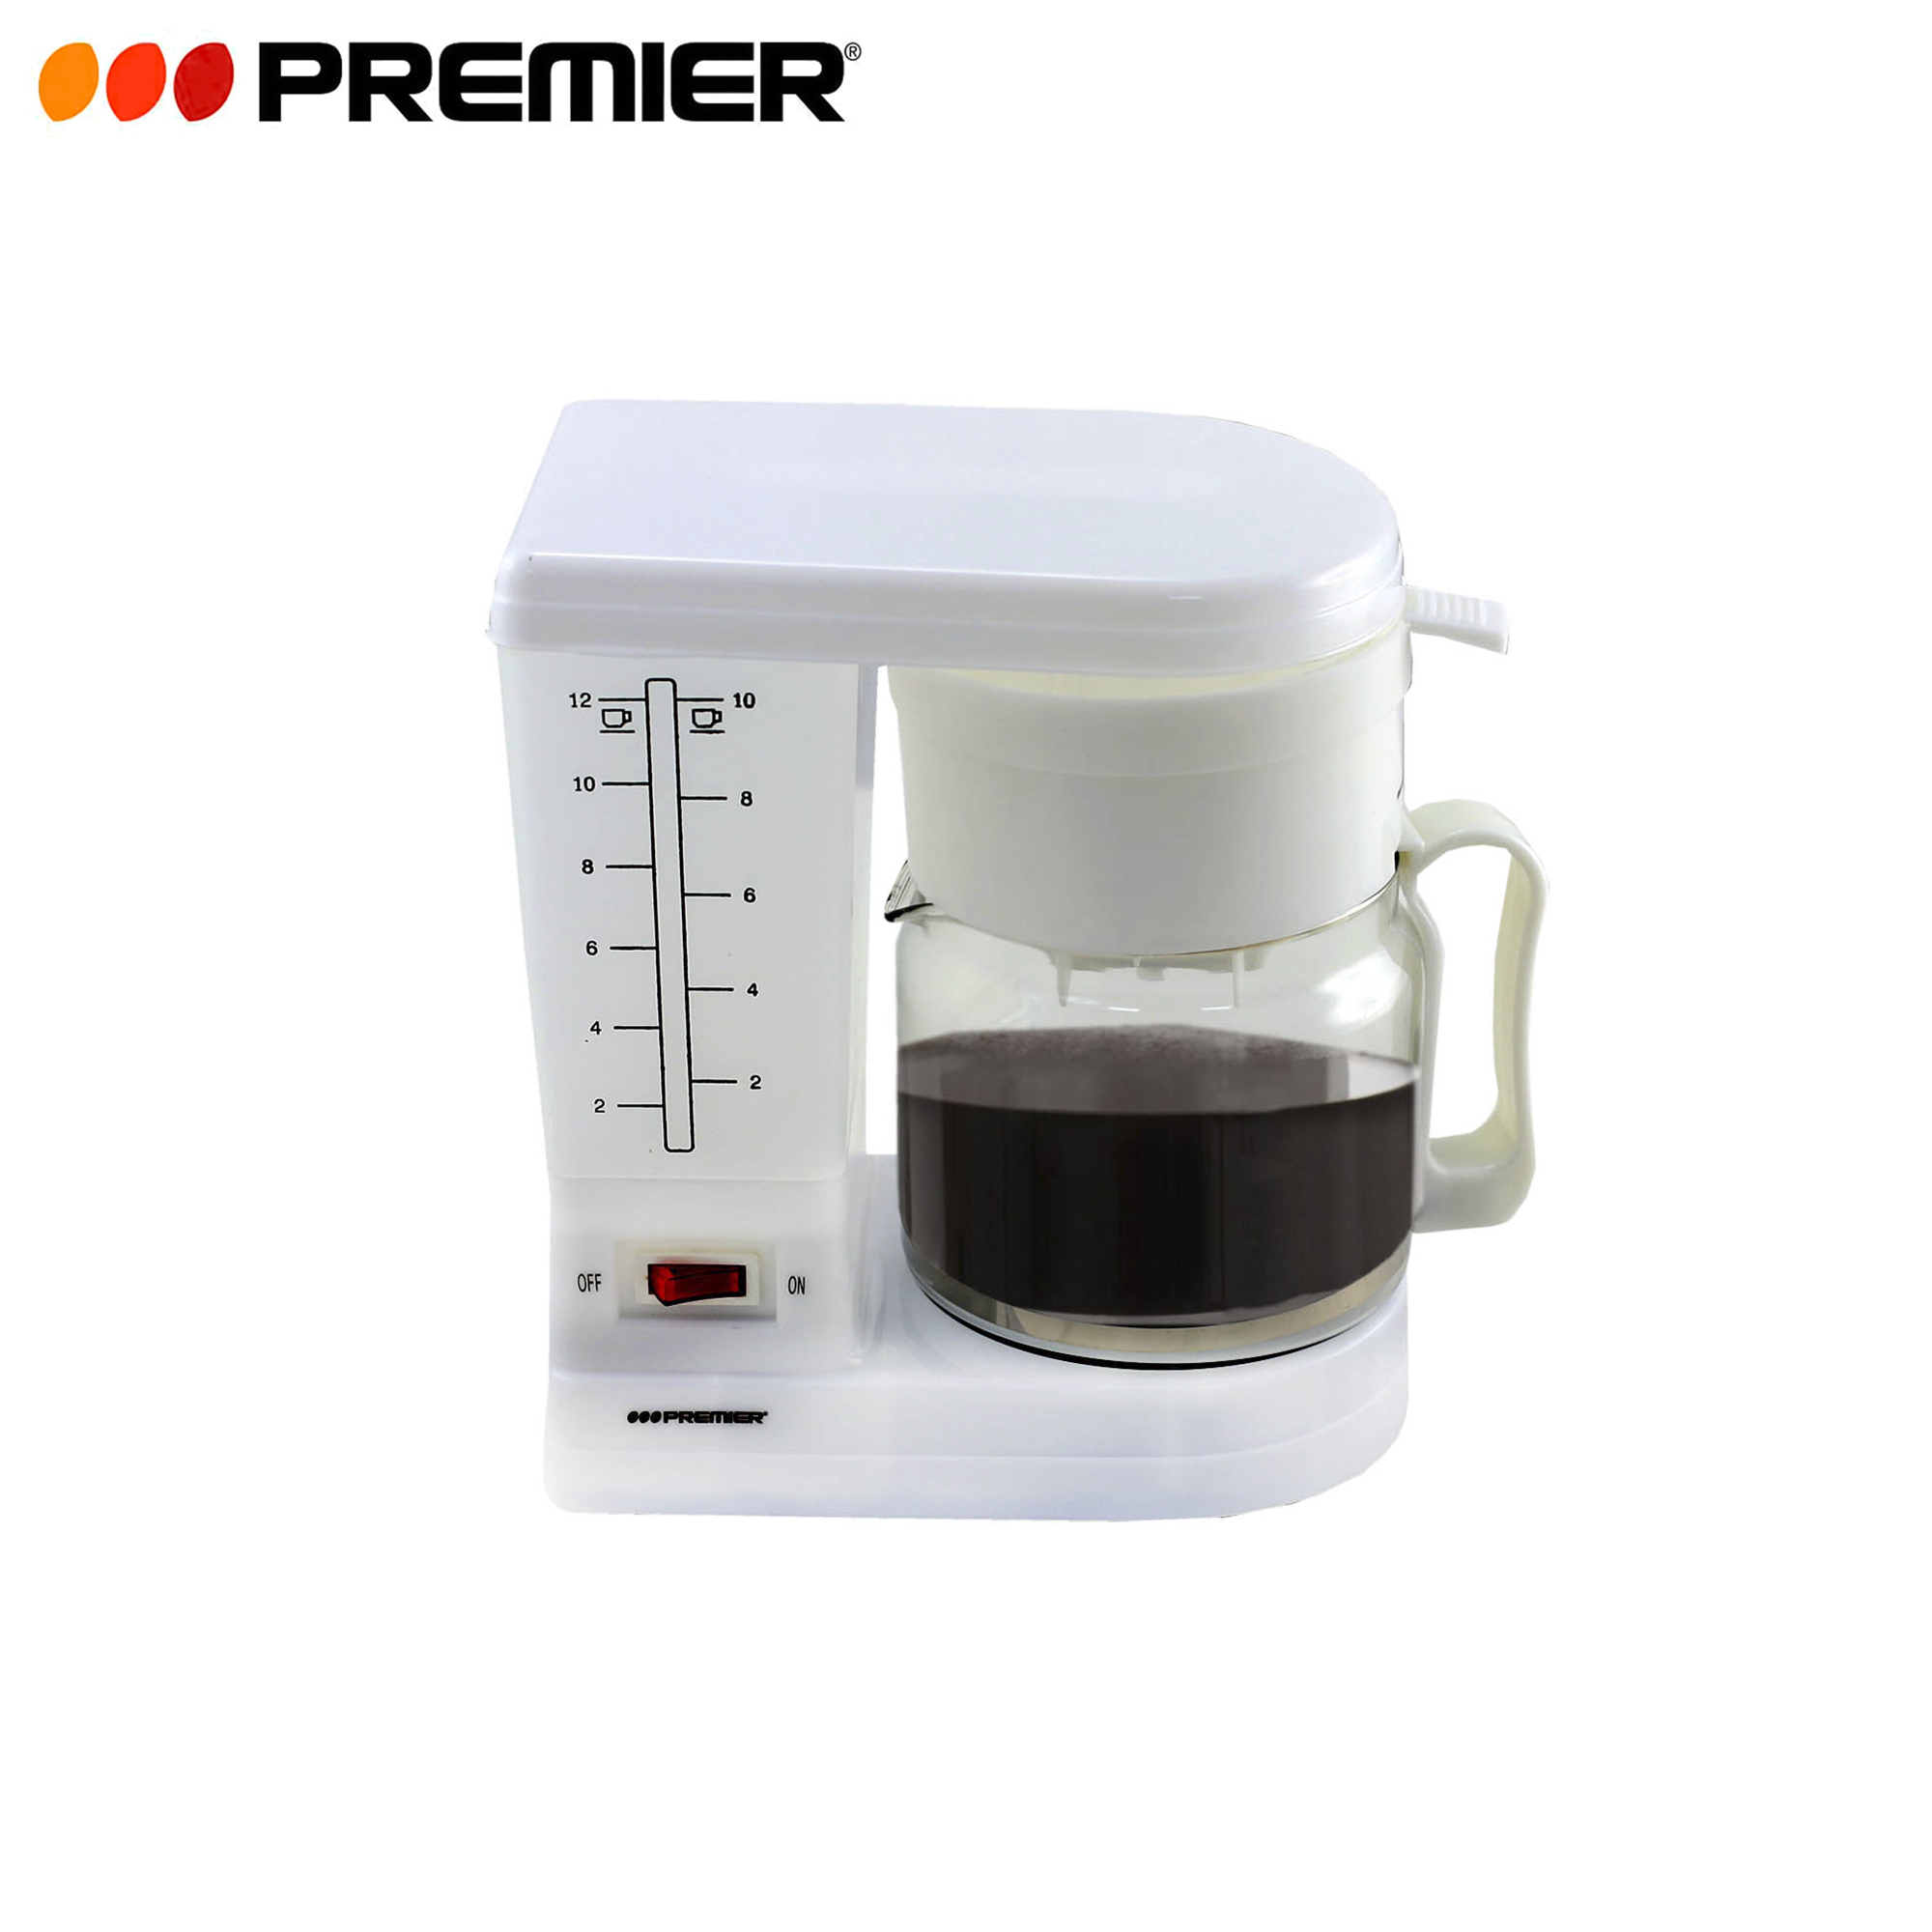 Cafetera 12 tazas Premier negro